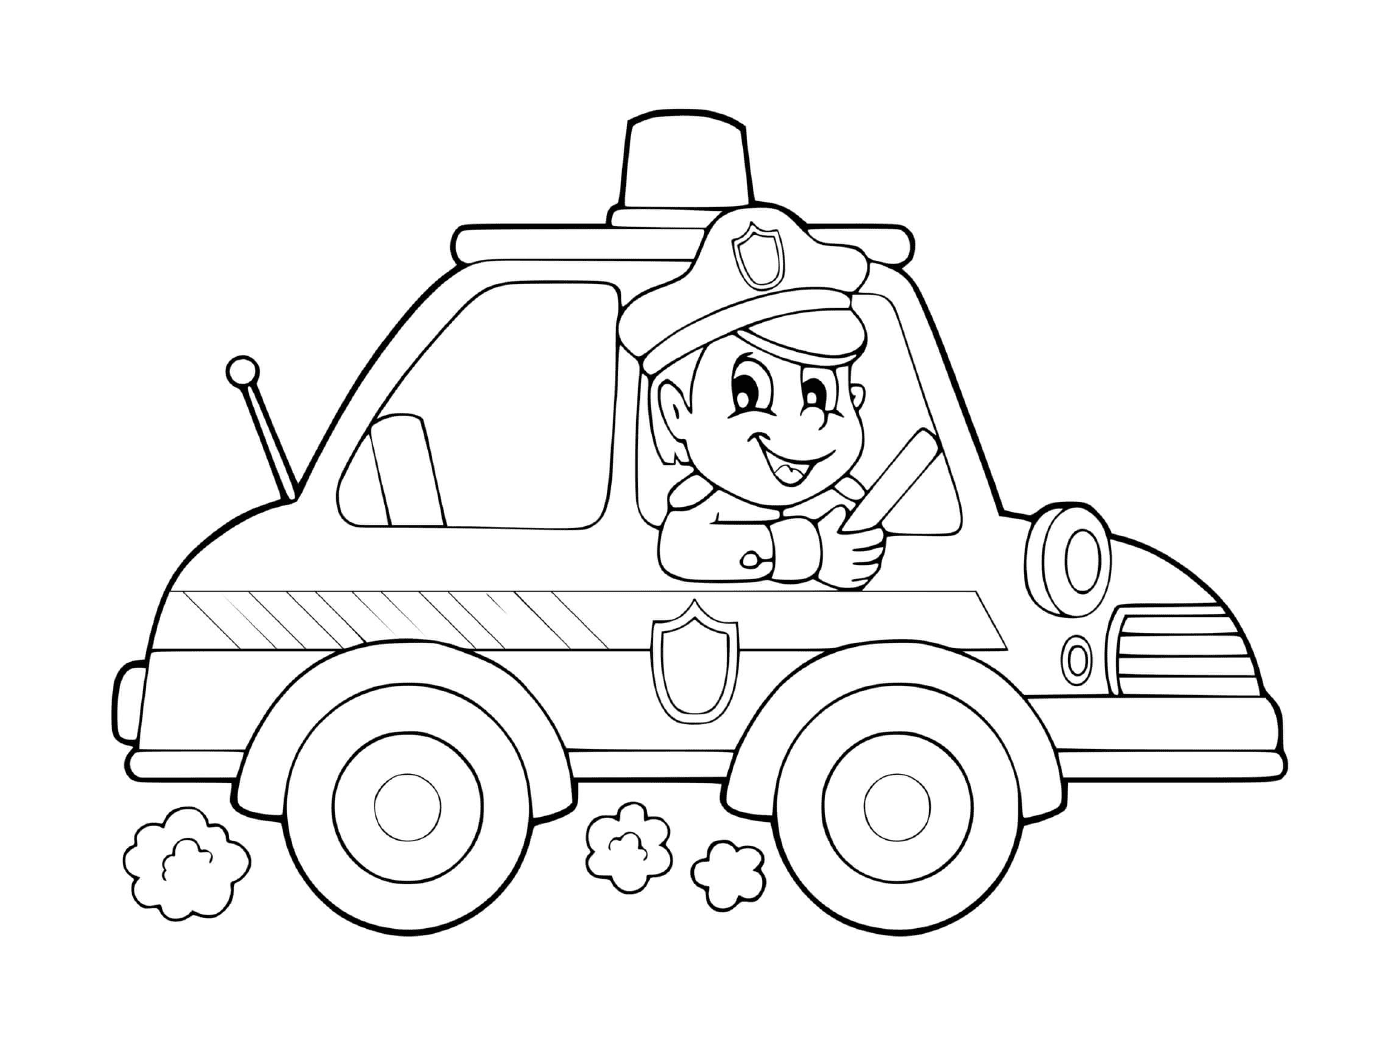  Driver policeman, patrol car 